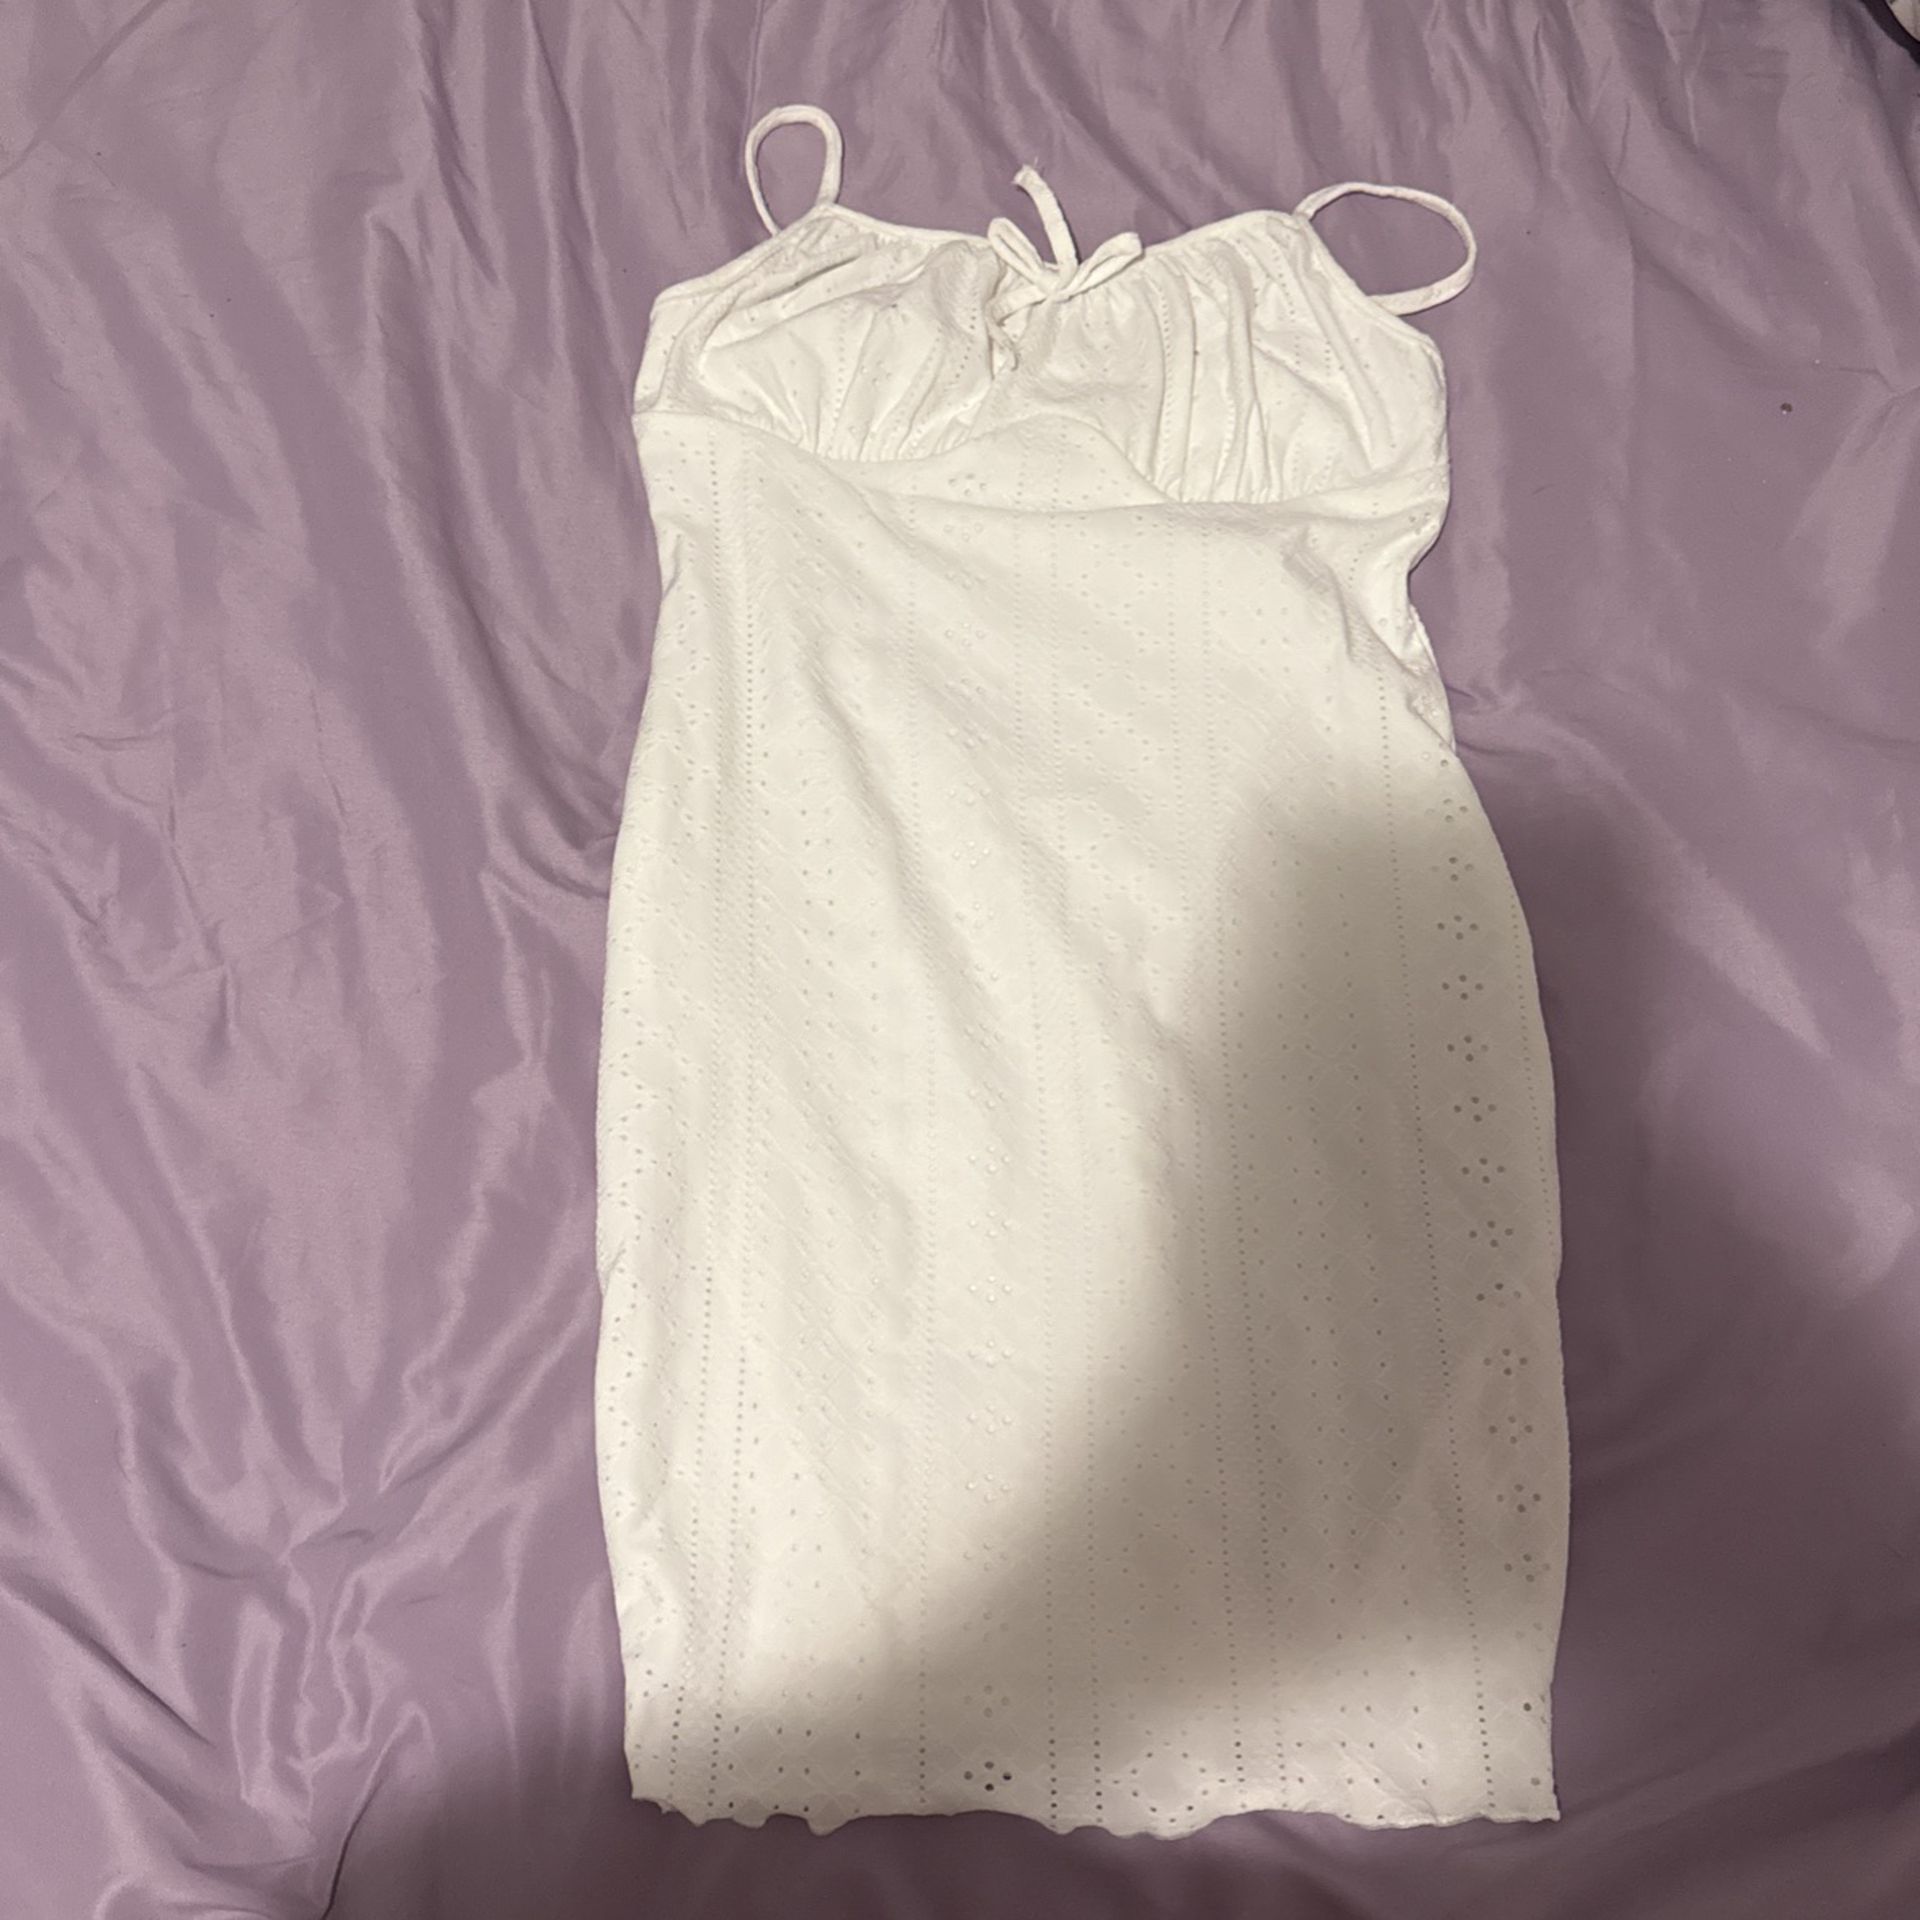 Shein white laced dress 12-13y